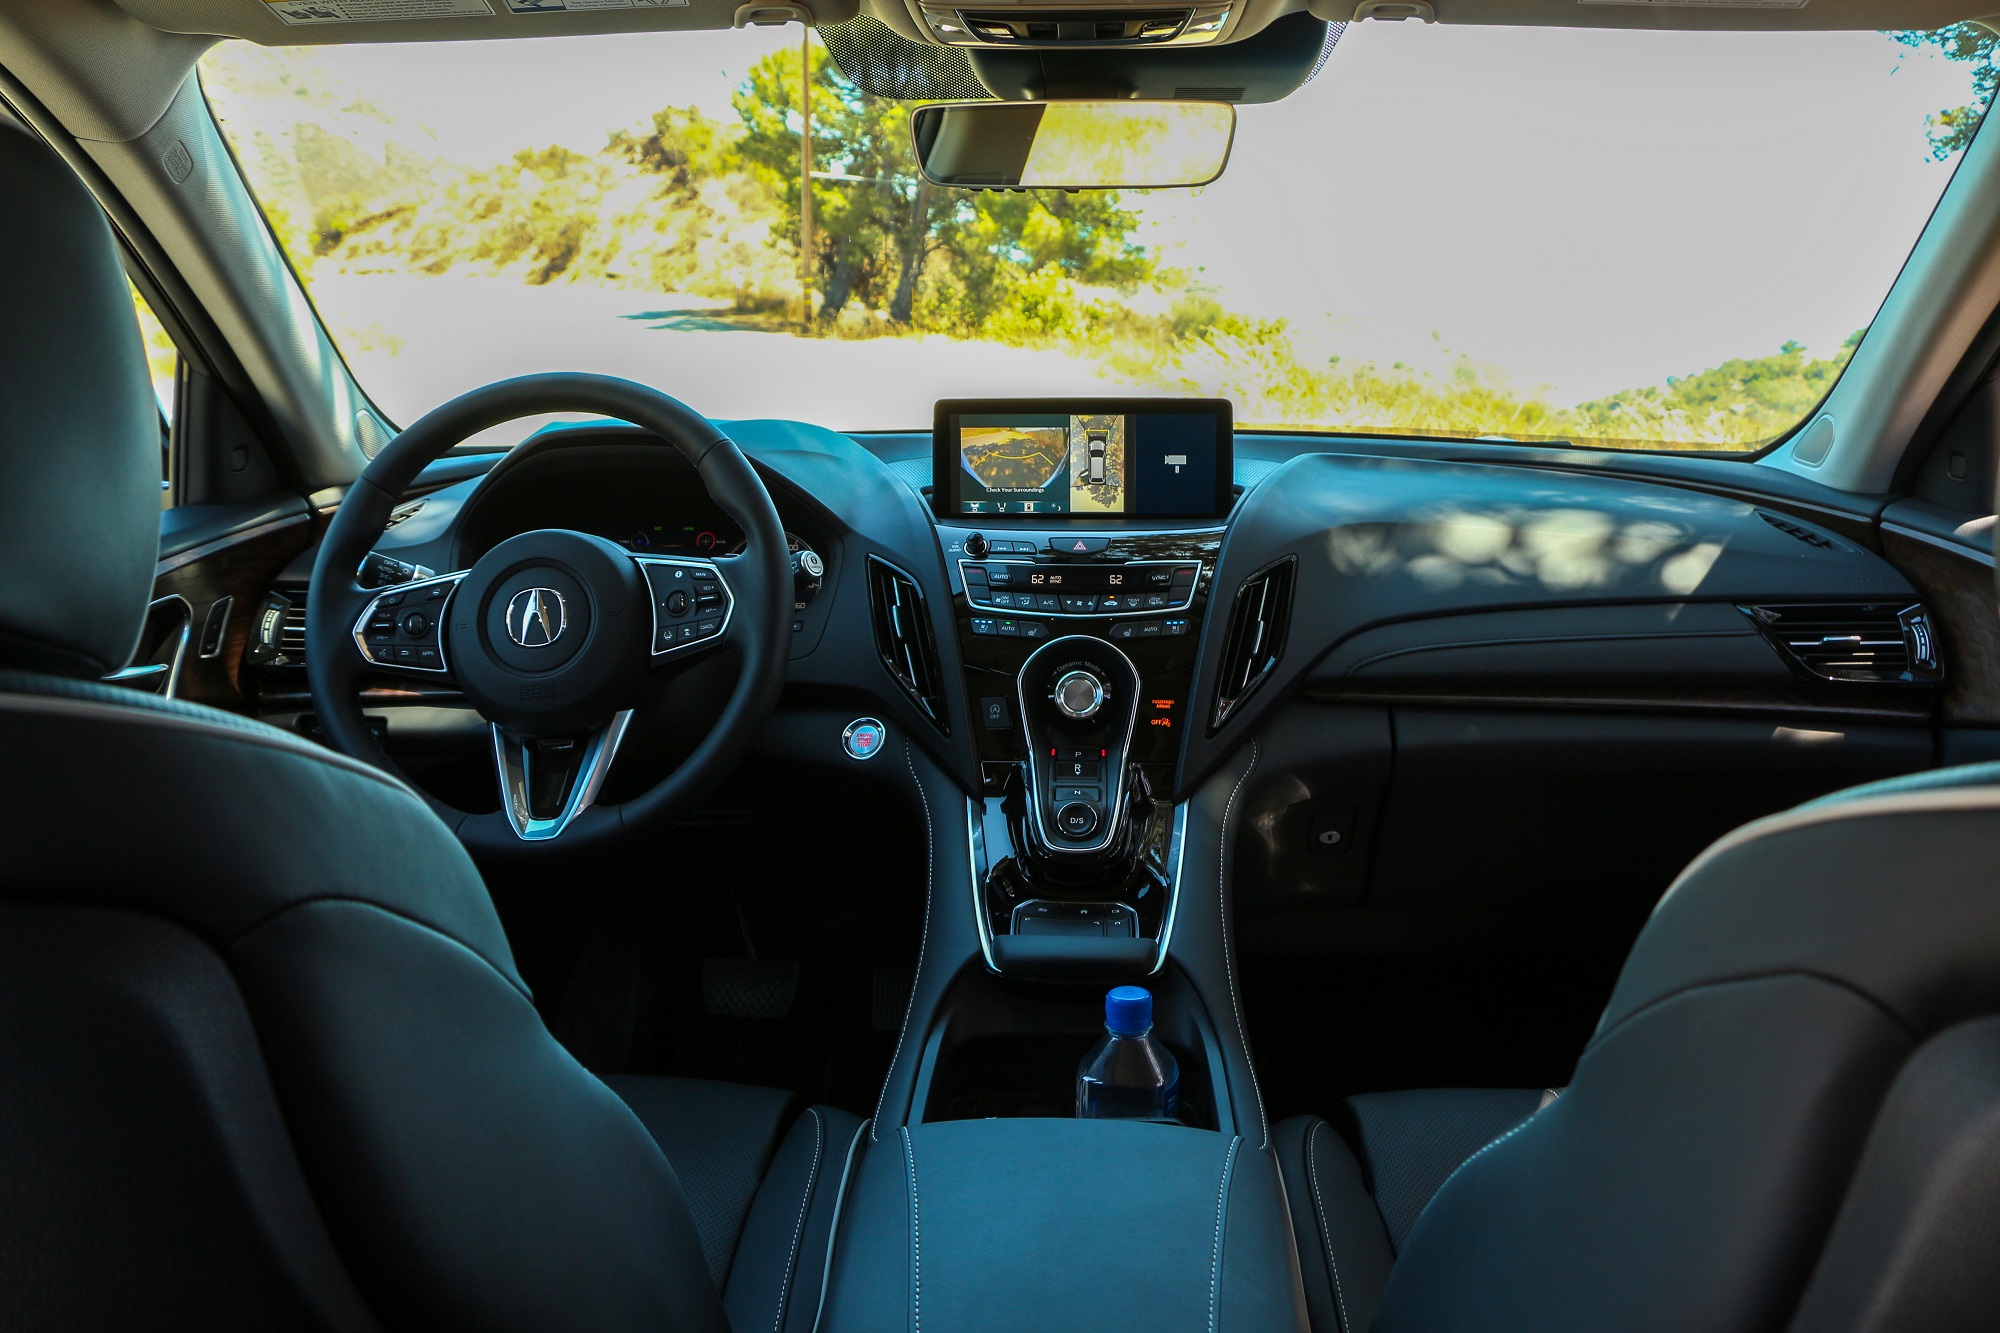 2019 Lexus NX NX300 F-Sport Infiniti QX50 Acura RDX Engine Transmission Interior Colors Options Price Review Japanese Luxury SUV Comparison Test ClubLexus.com Jake Stumph